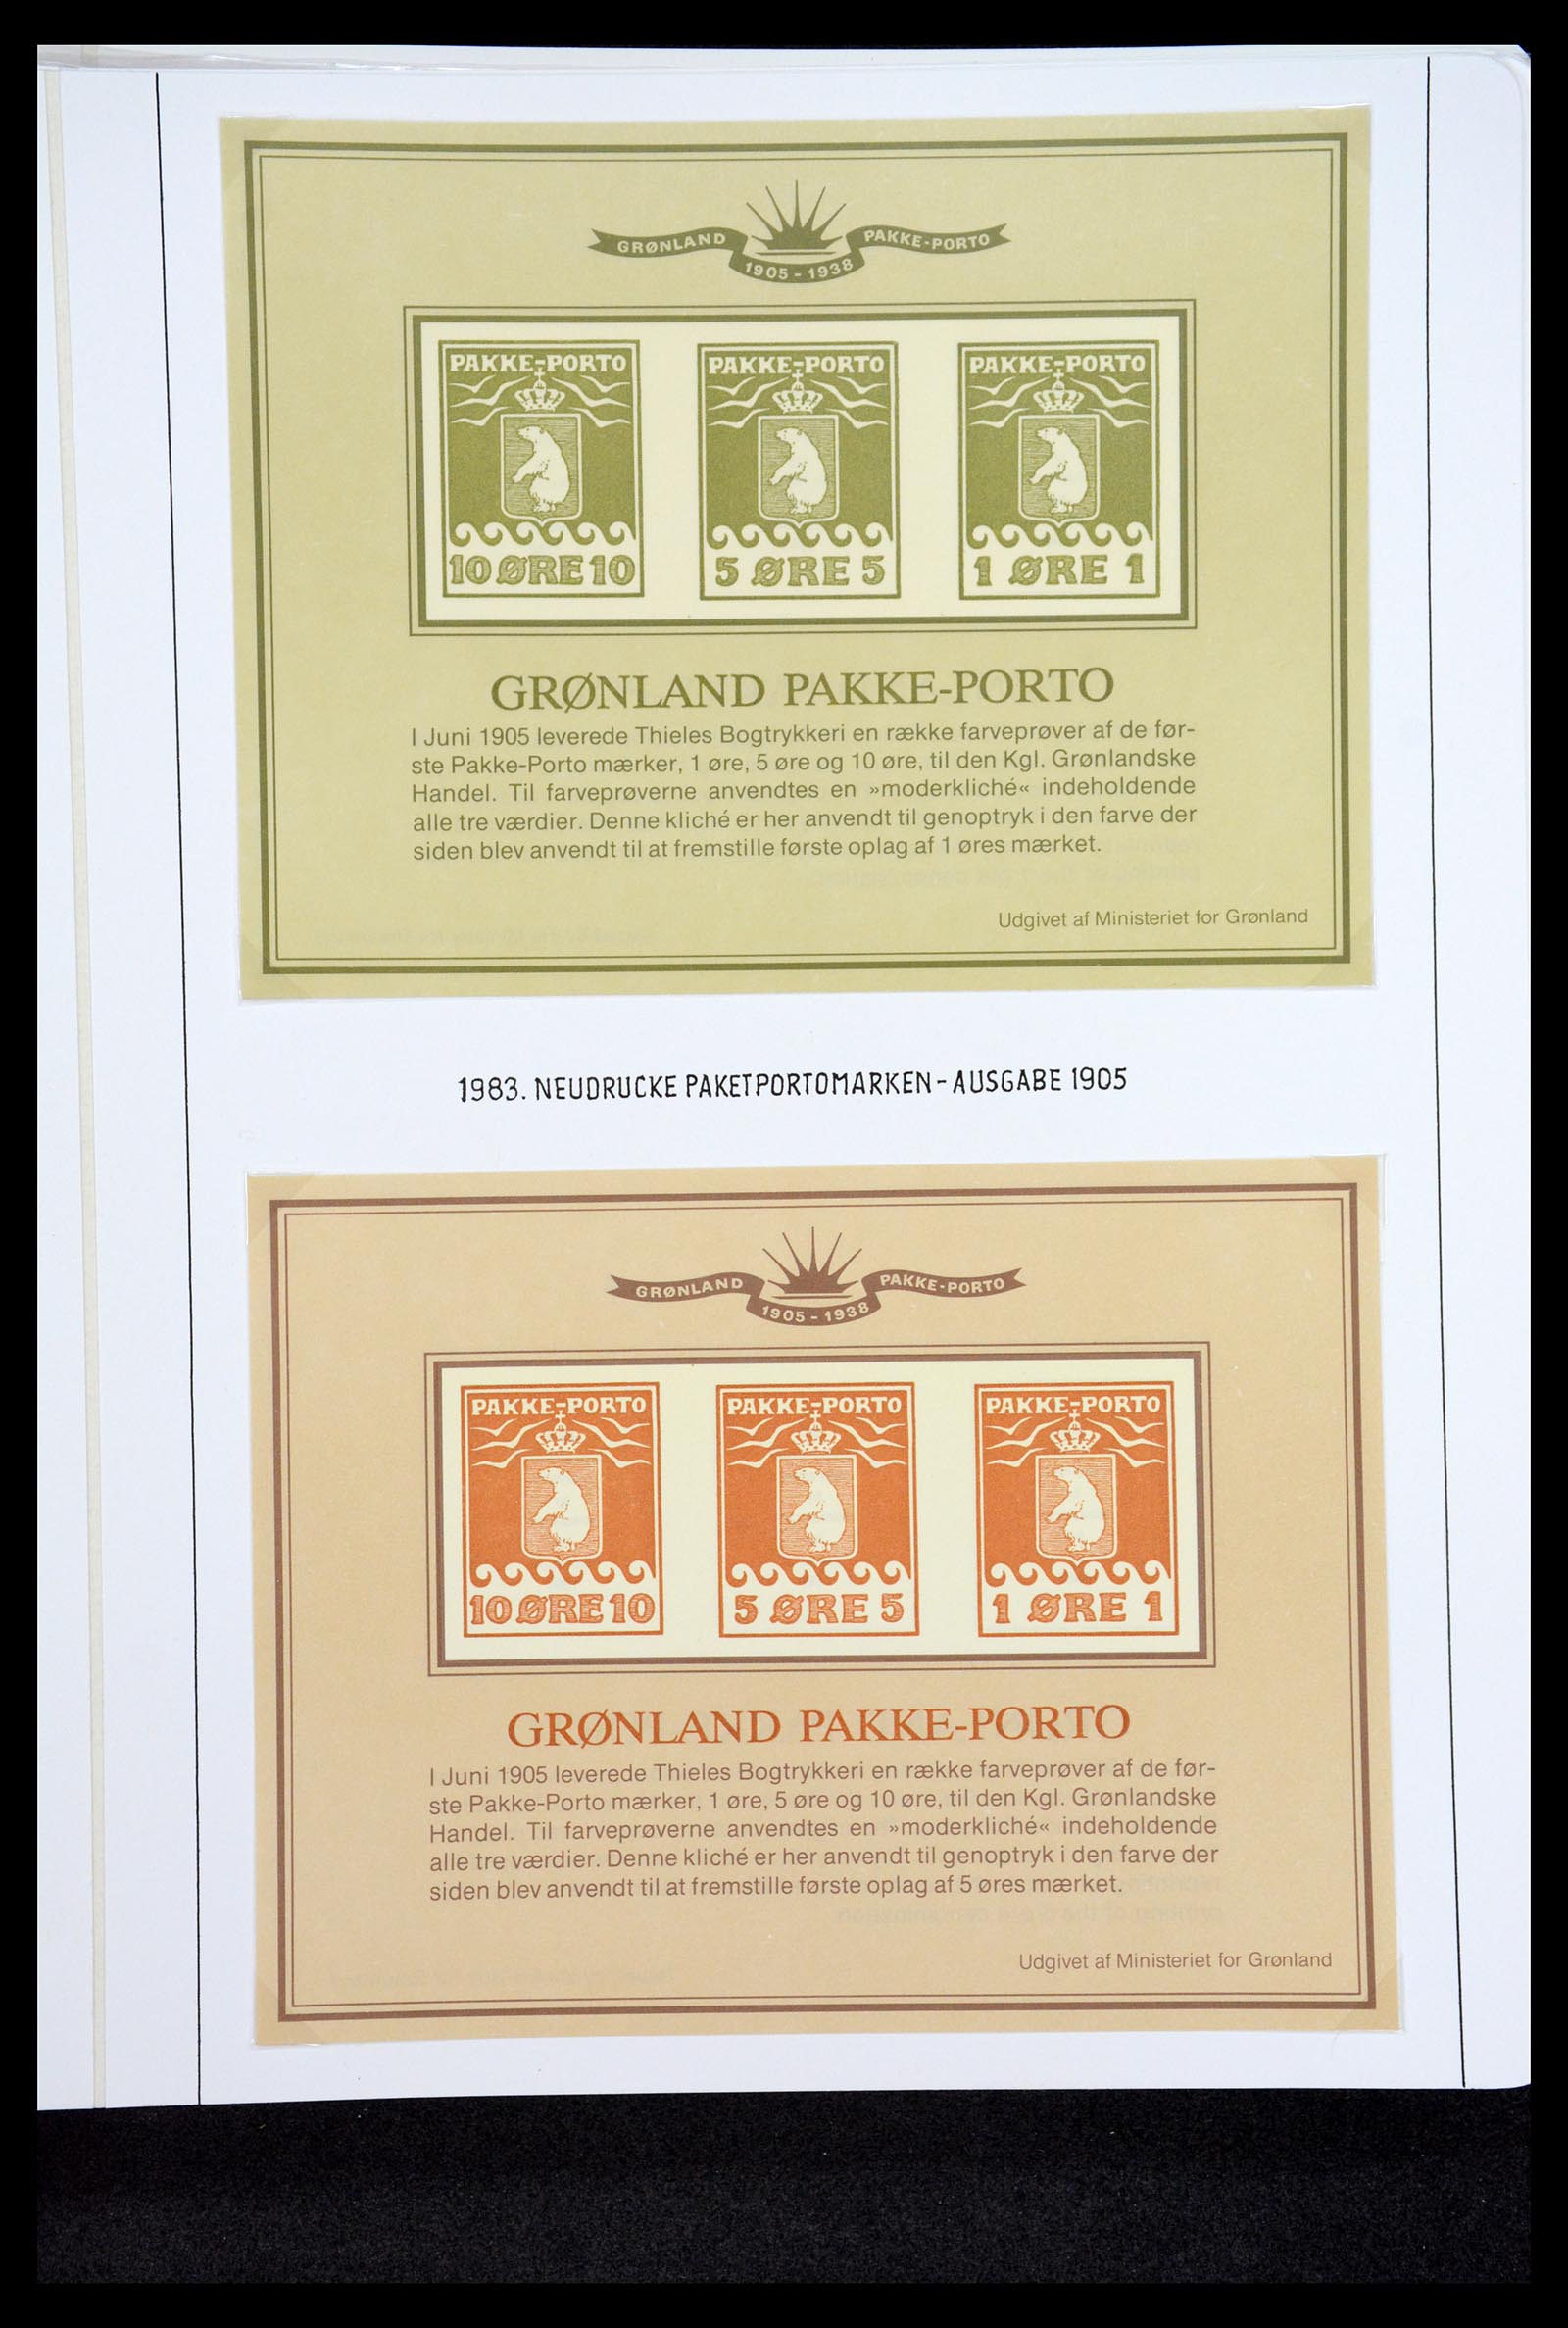 36748 008 - Stamp collection 36748 Greenland pakke-porto 1905-1930.